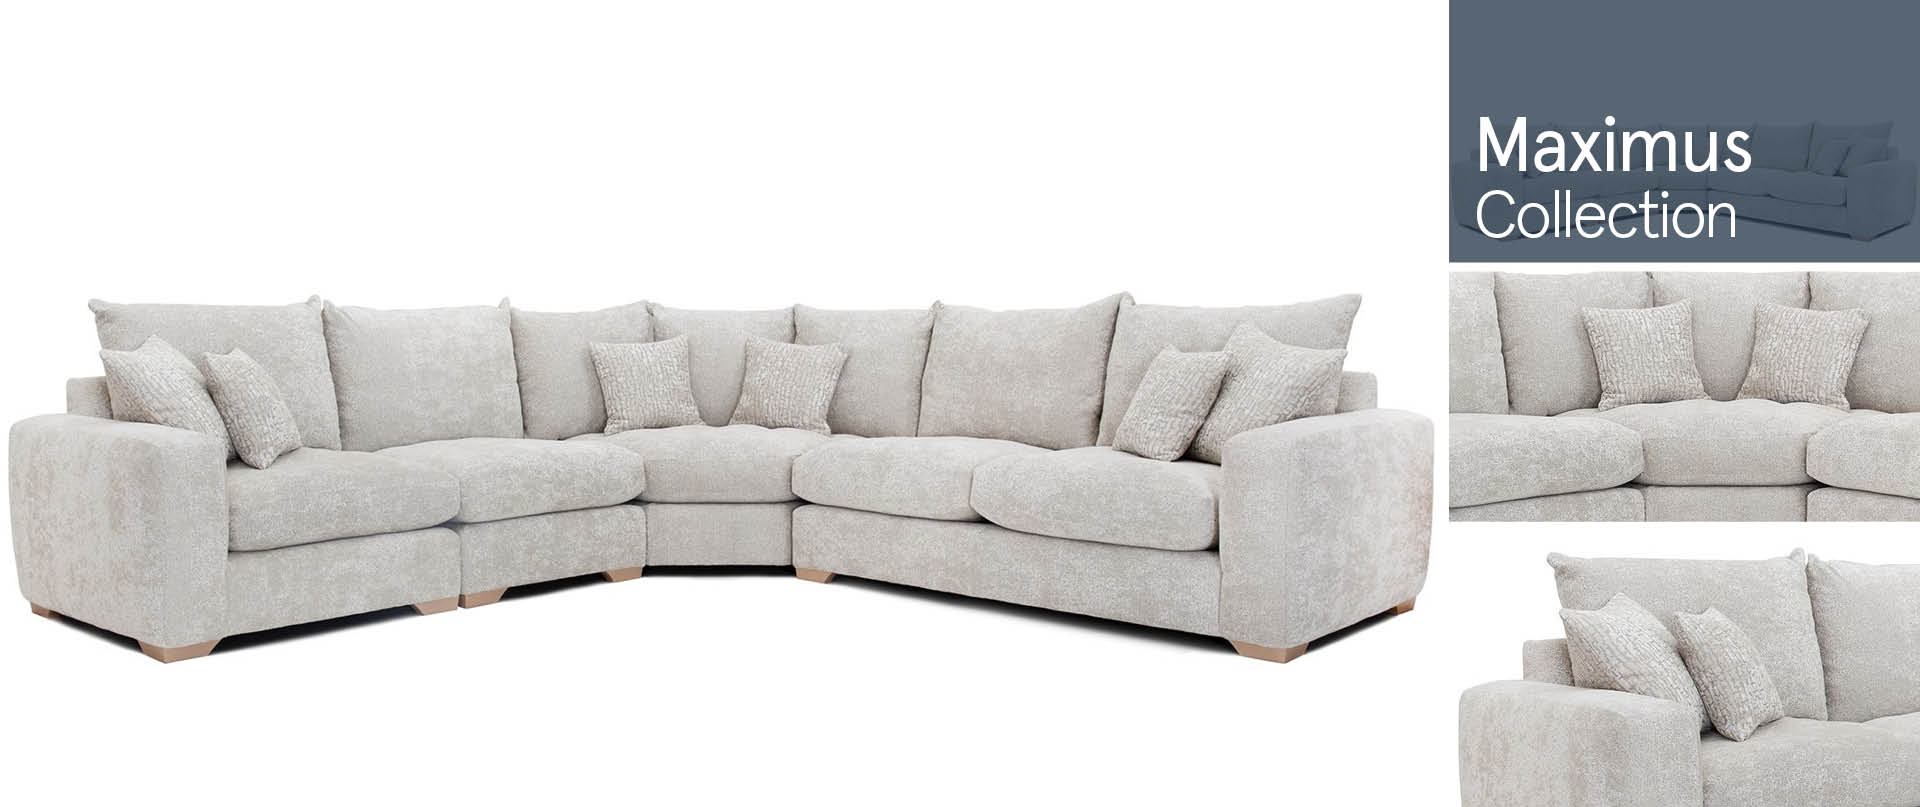 Maximus All Fabric Sofa Ranges